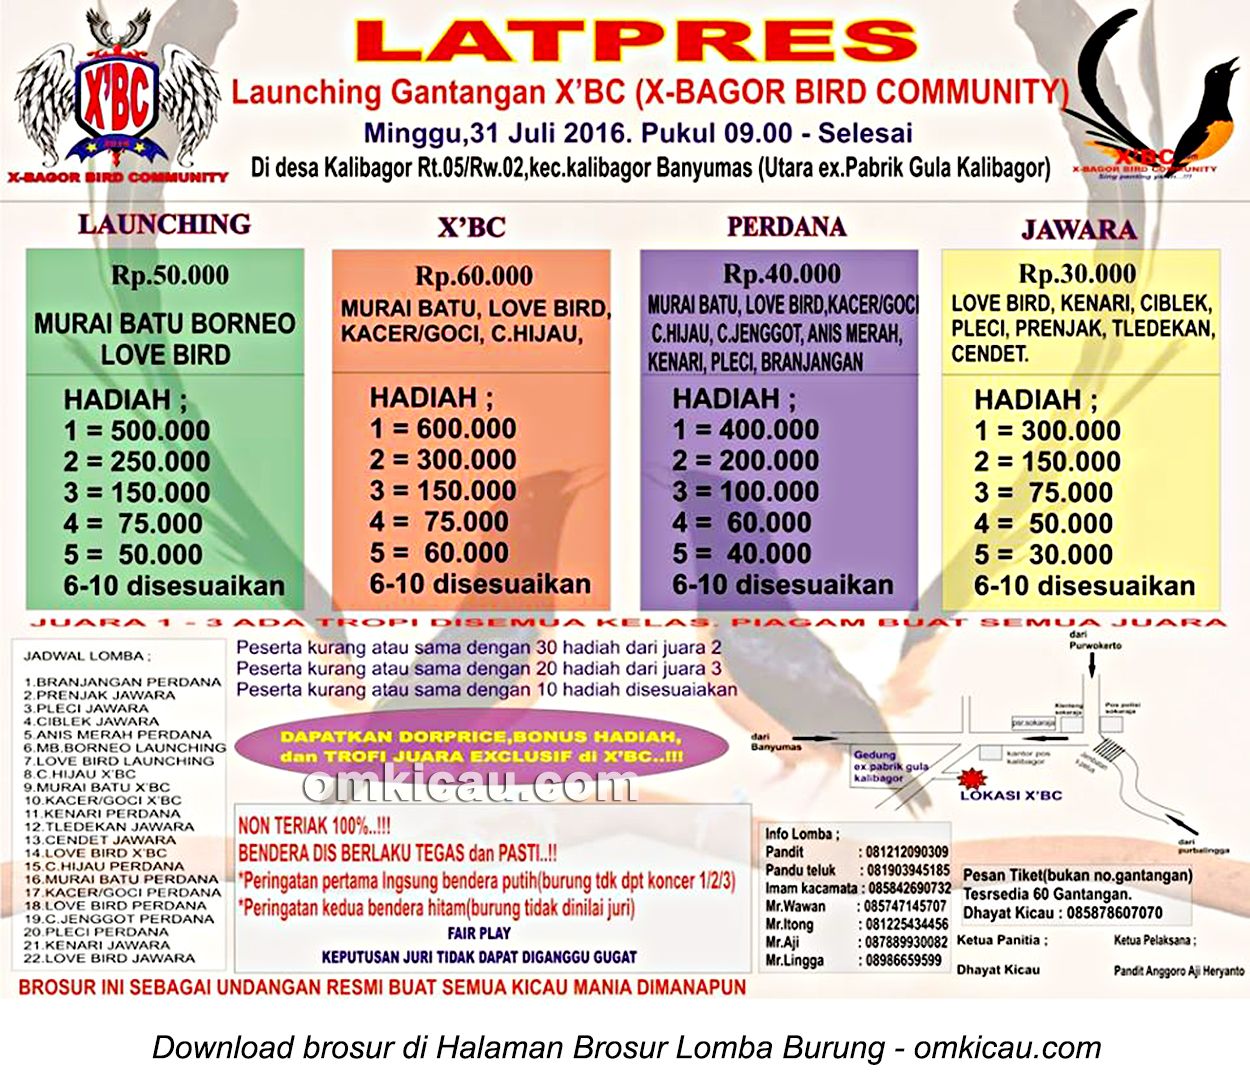 Brosur Latpres Launching Gantangan X-Bagor BC, Banyumas, 31 Juli 2016